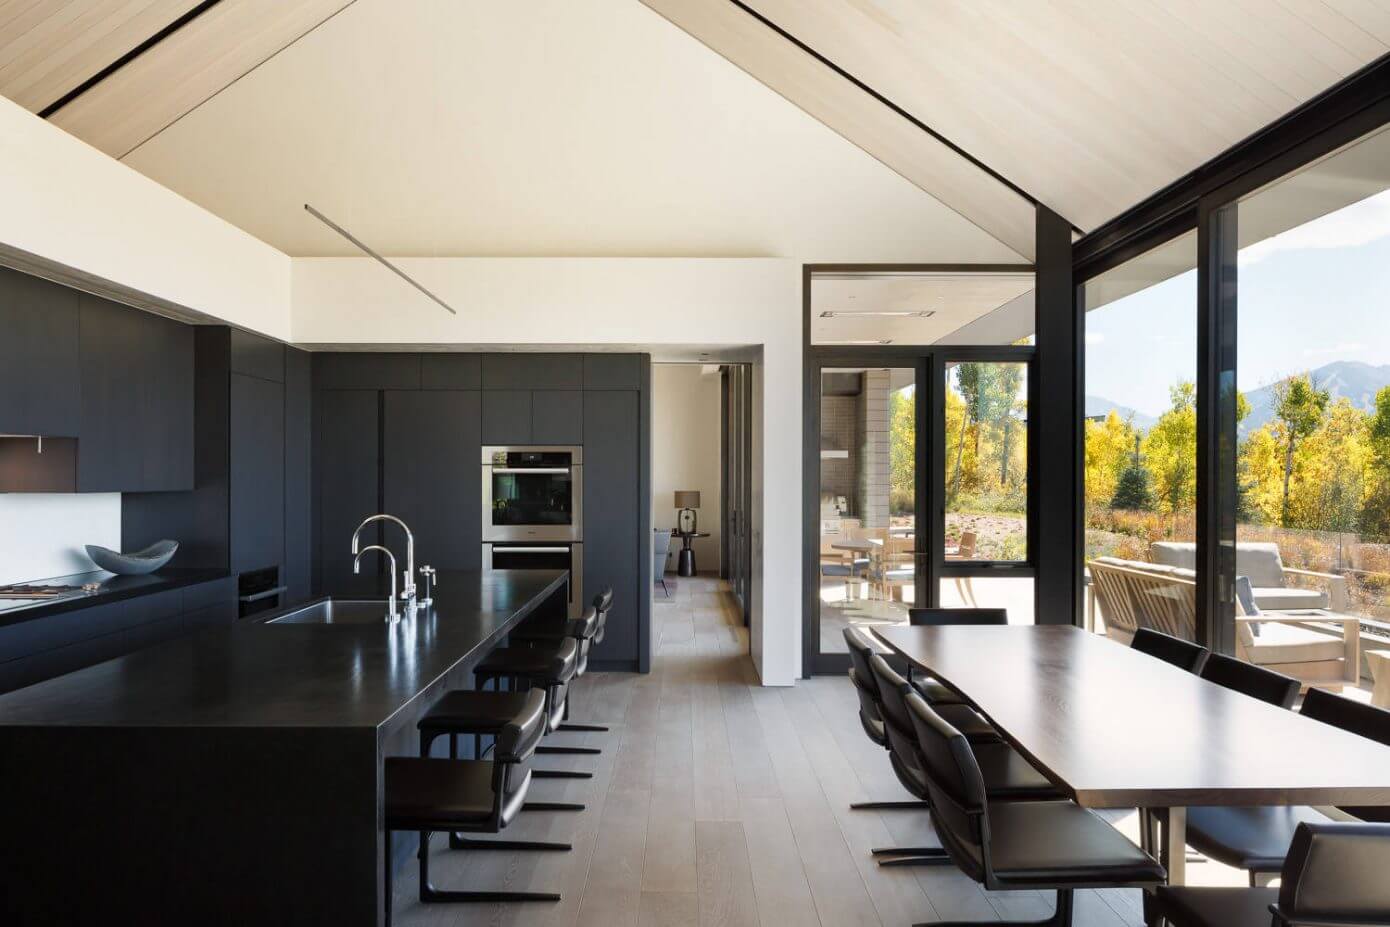 015 Aspen Home Design Studio Interior Solutions 1390x927 